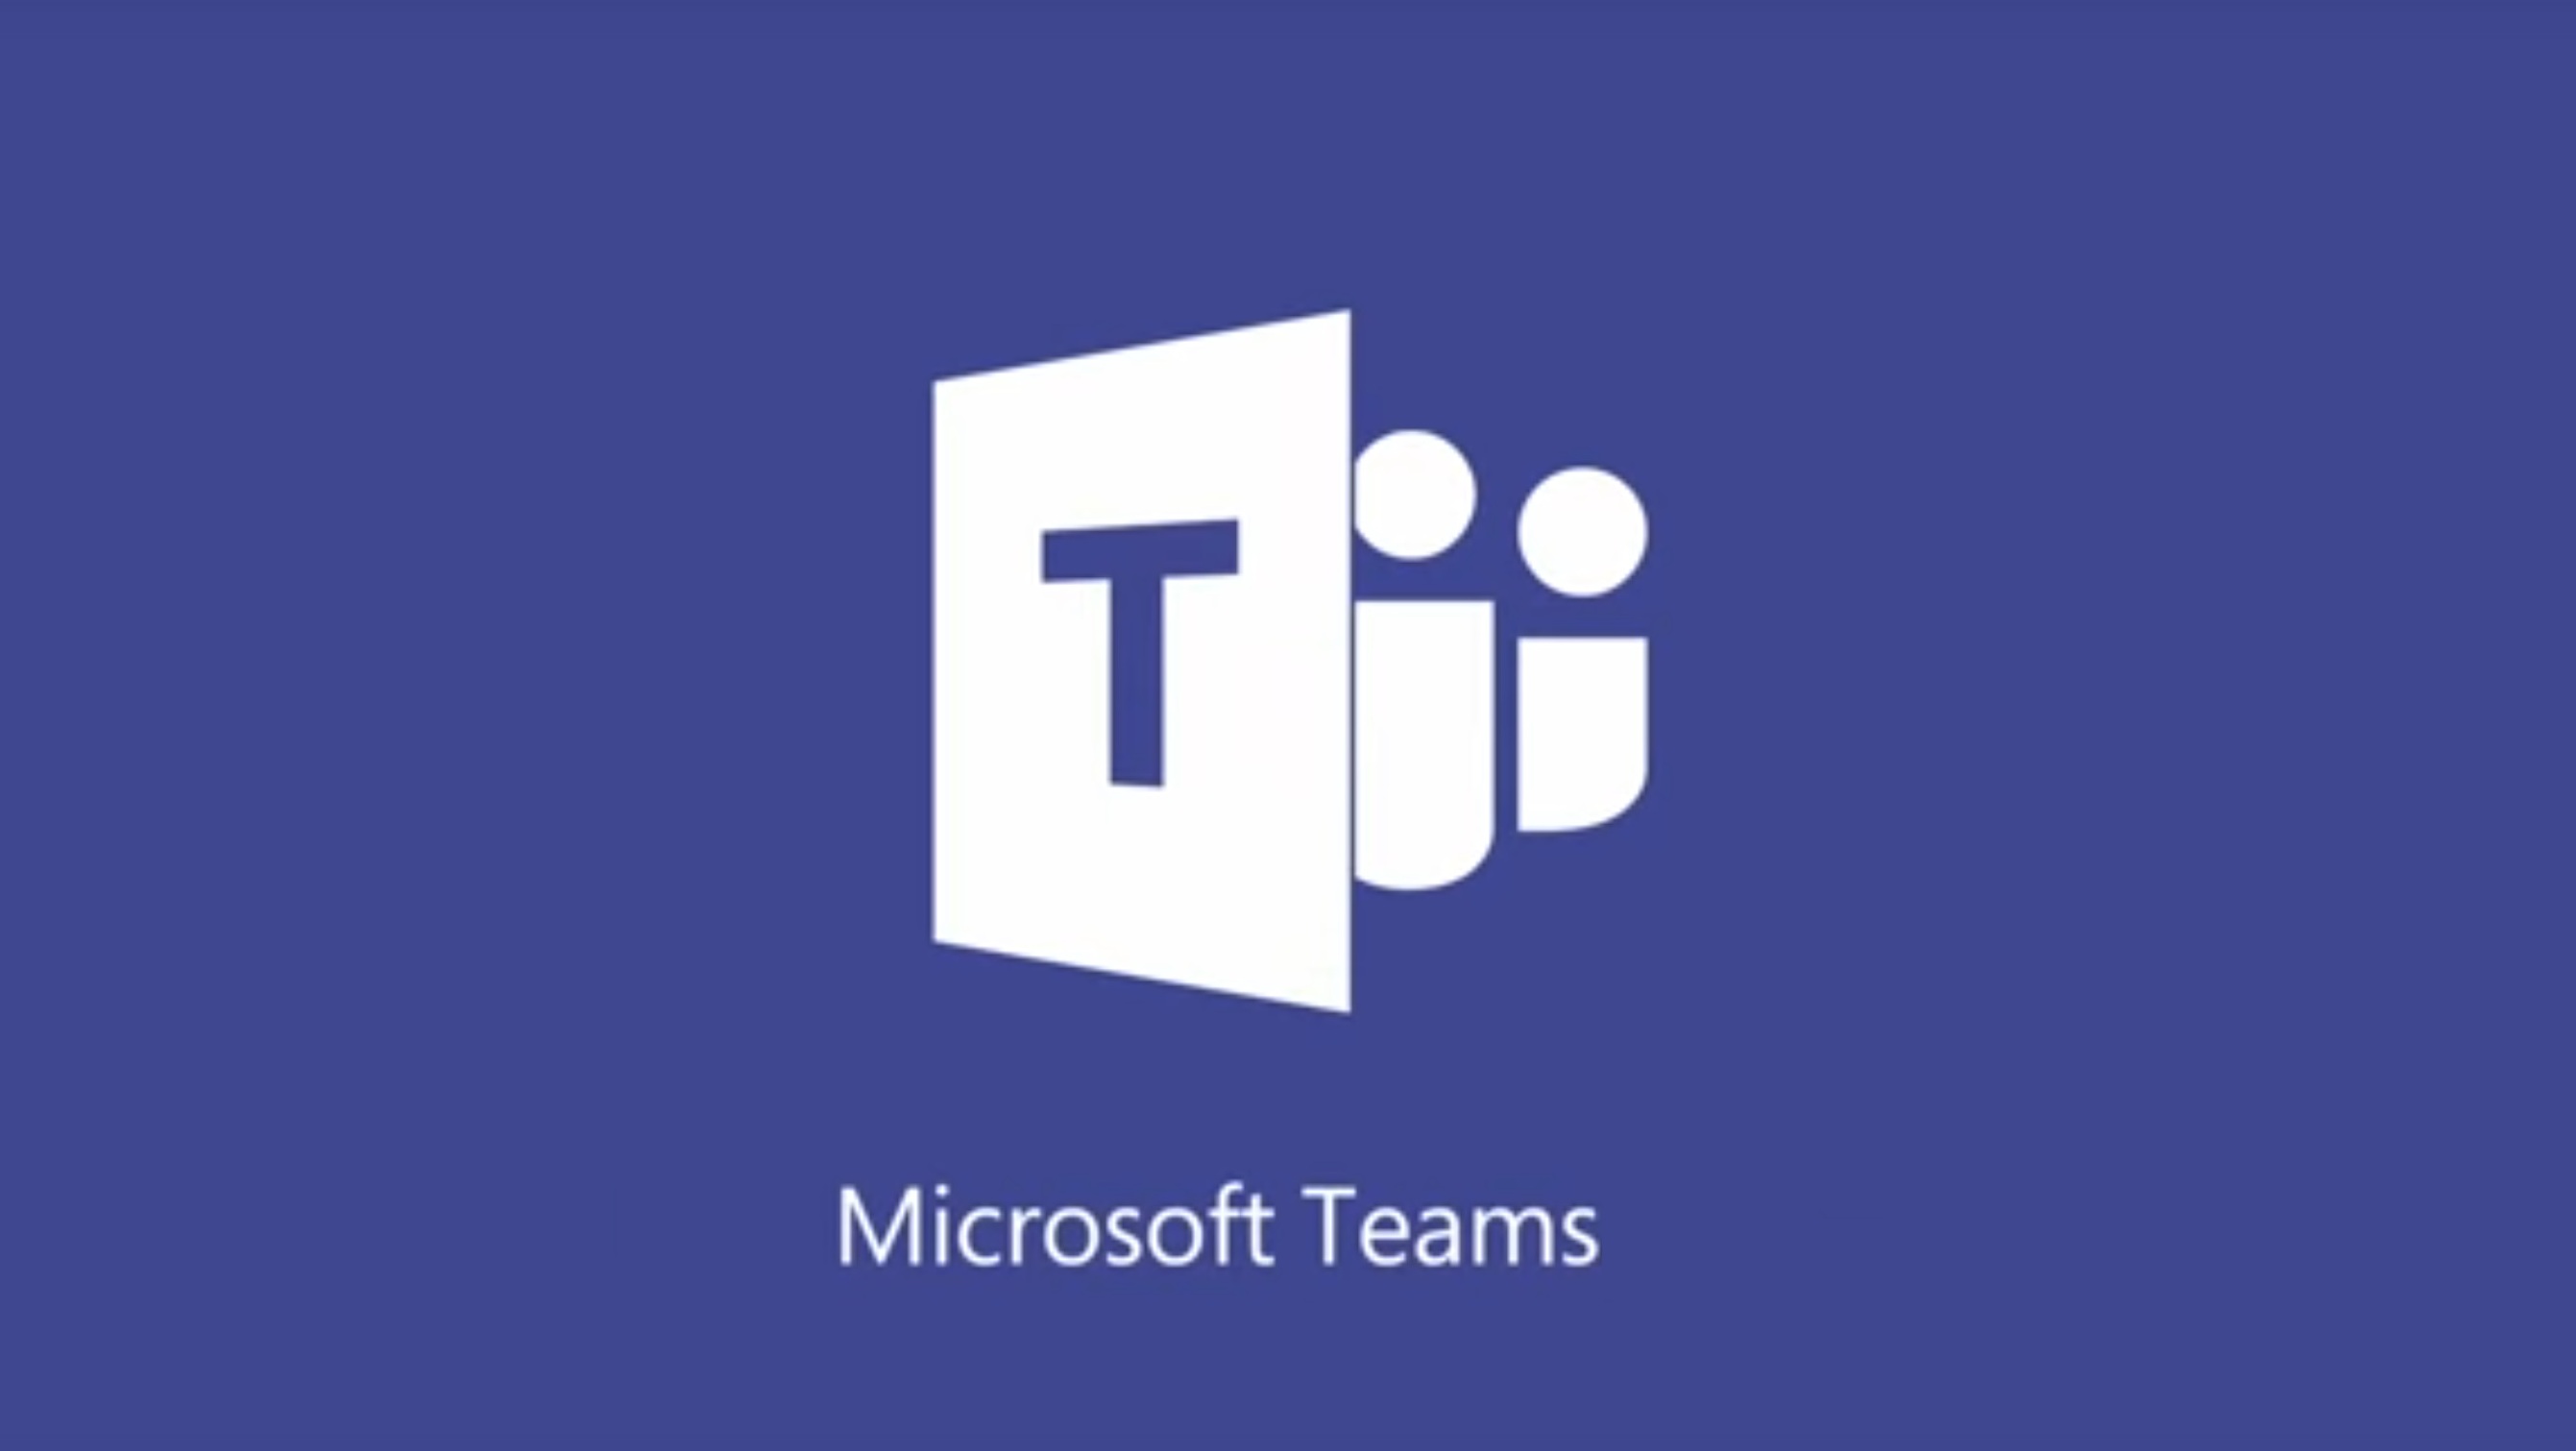 Microsoft Teams - a whole new strategy